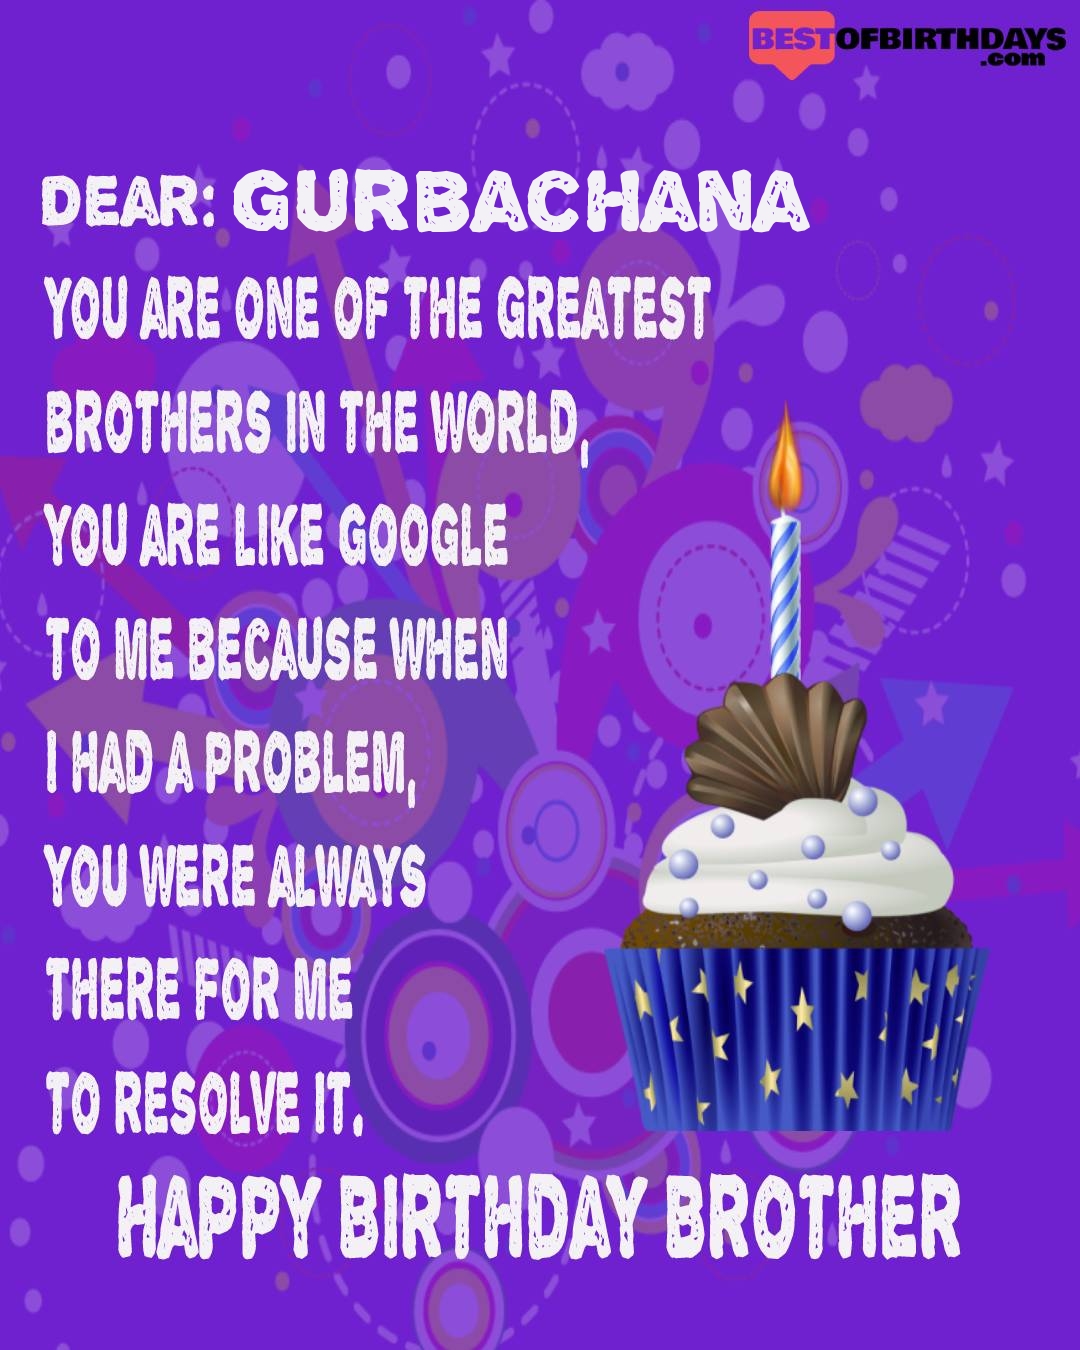 Happy birthday gurbachana bhai brother bro